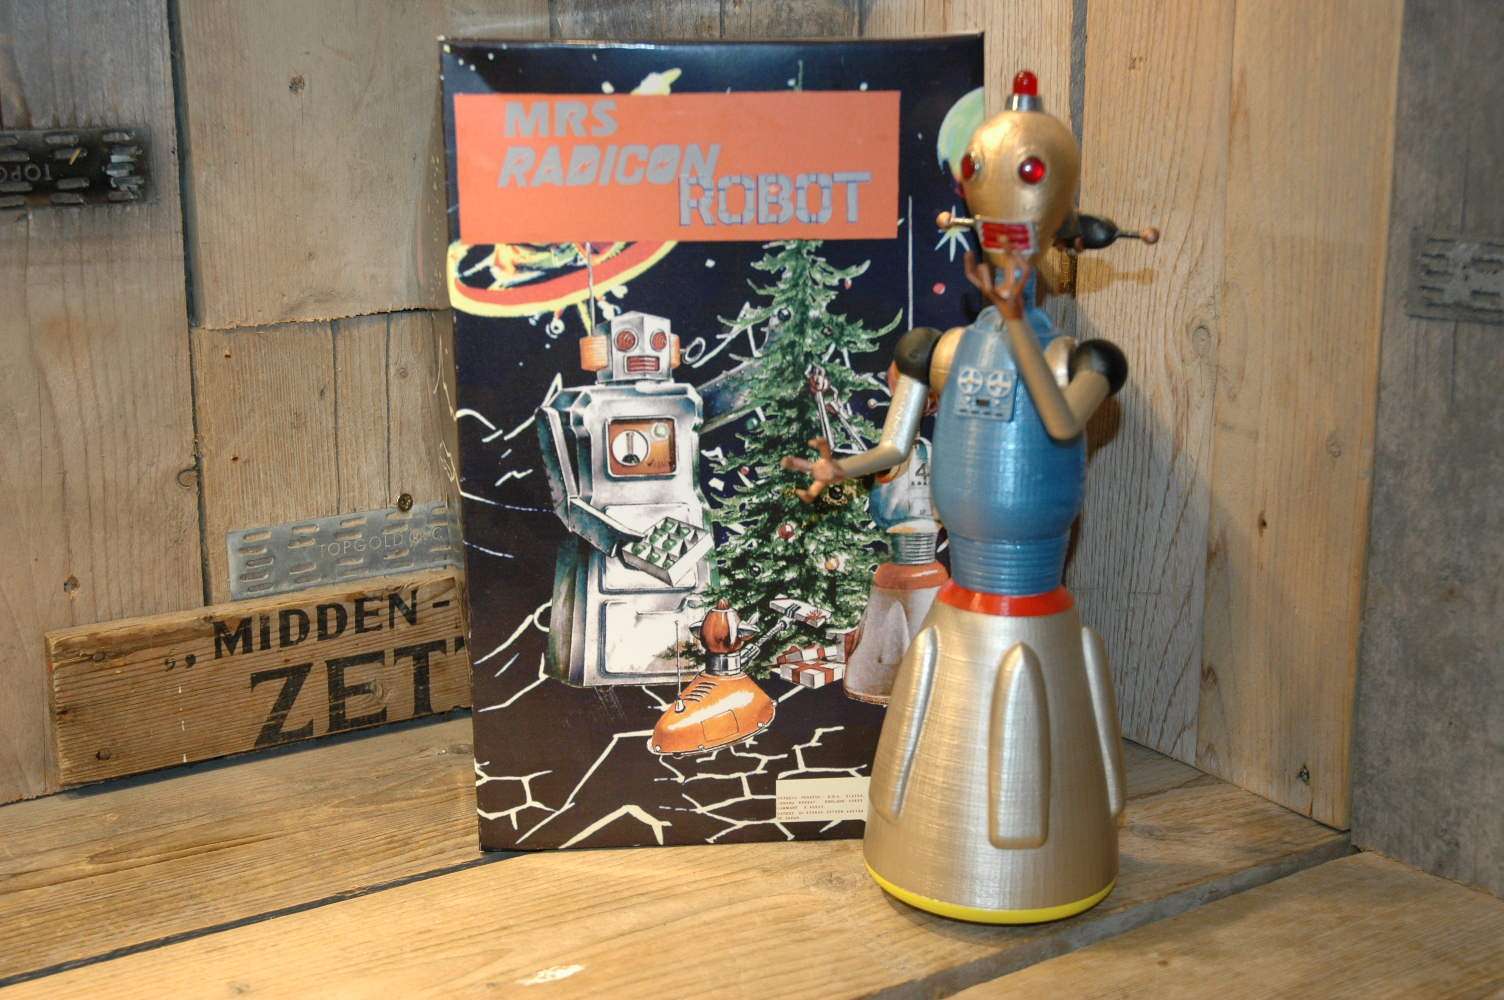 Roboz Inc. - Mrs. Radicon Robot